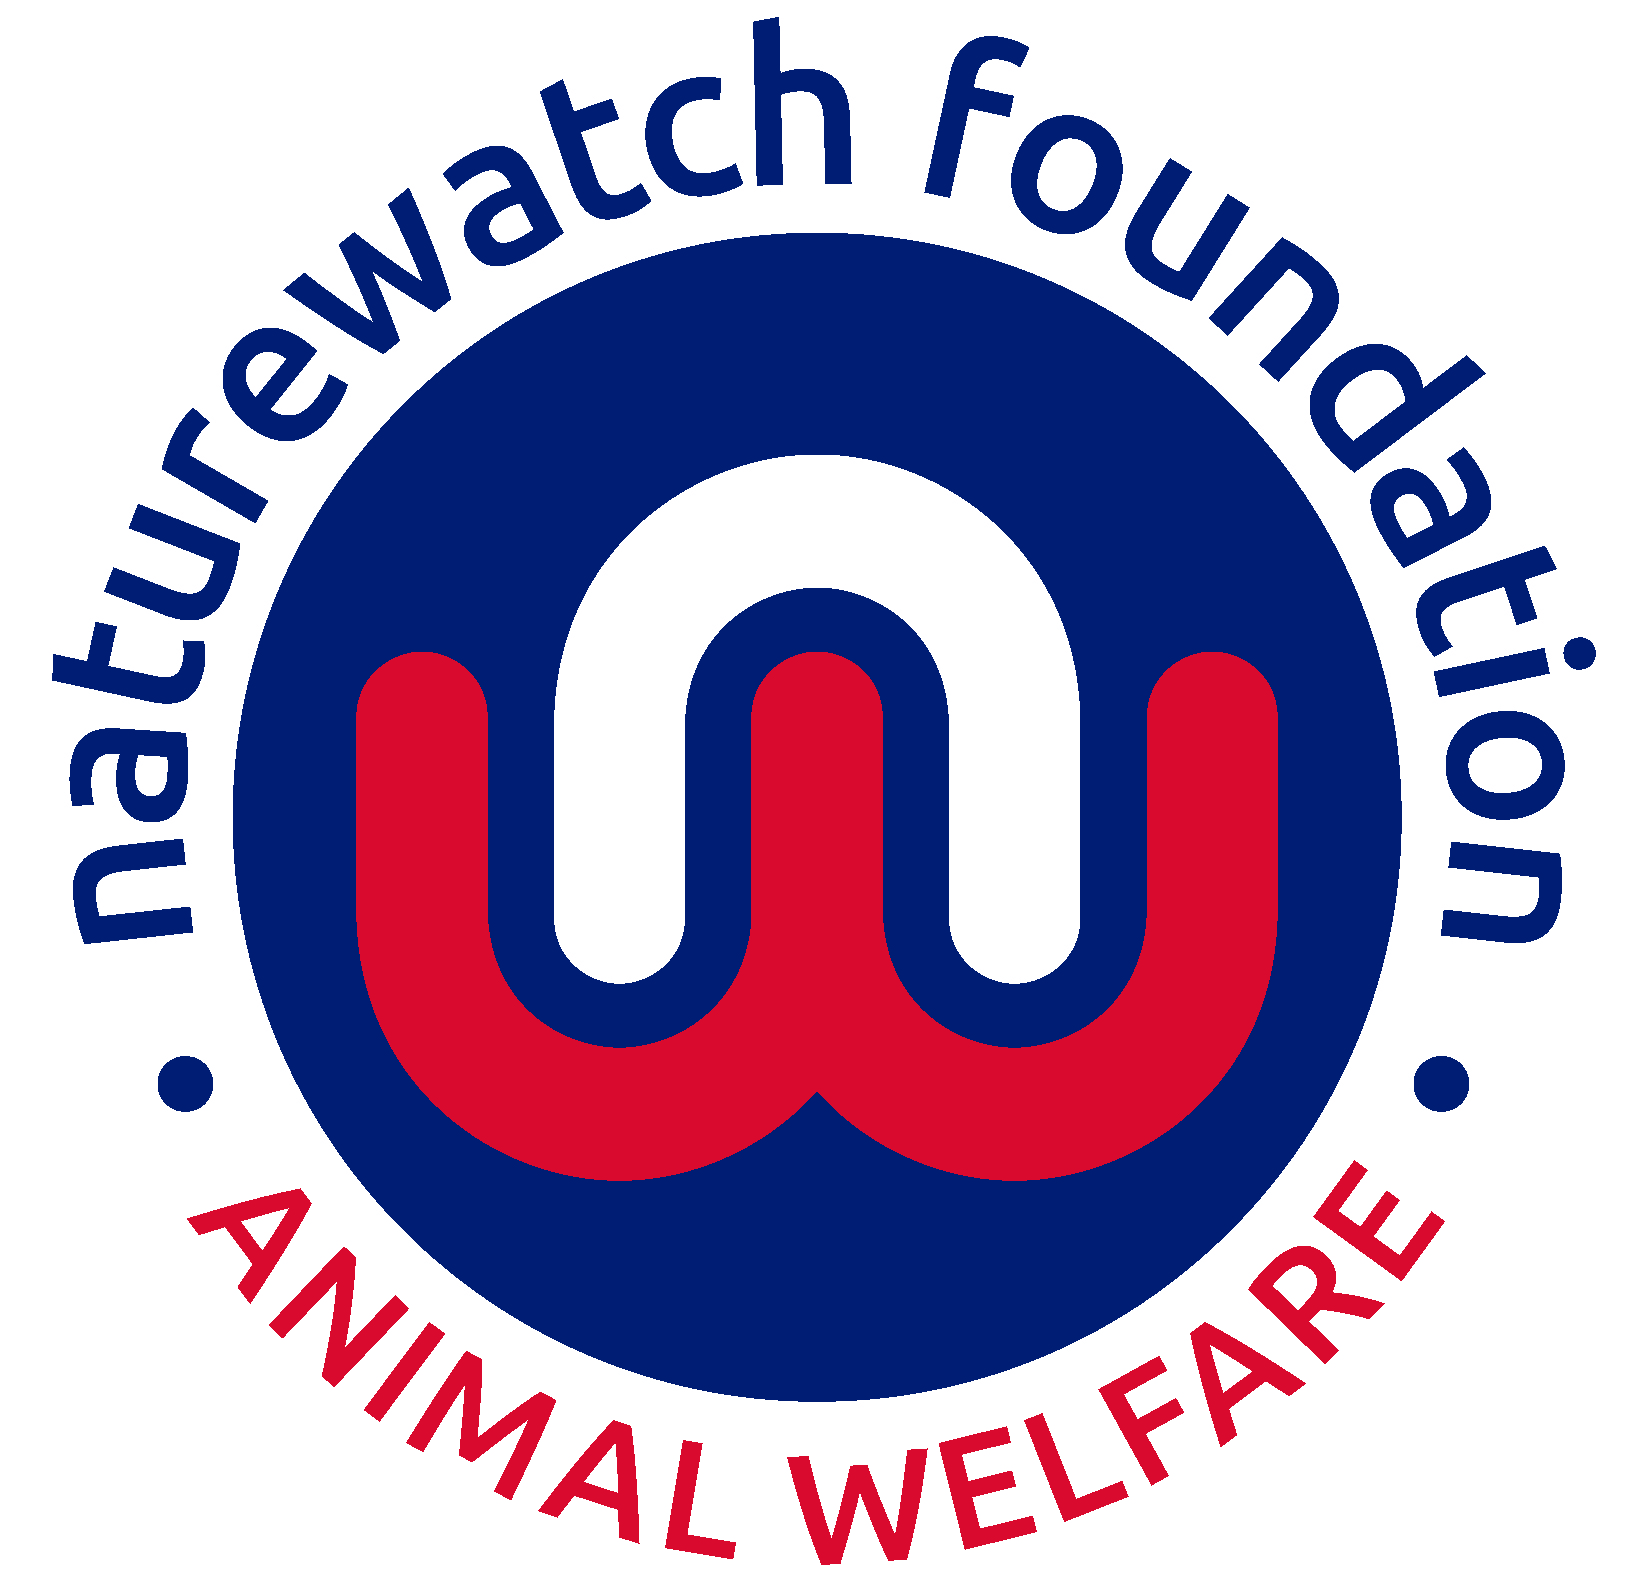 Naturewatch foundation, animal welfare